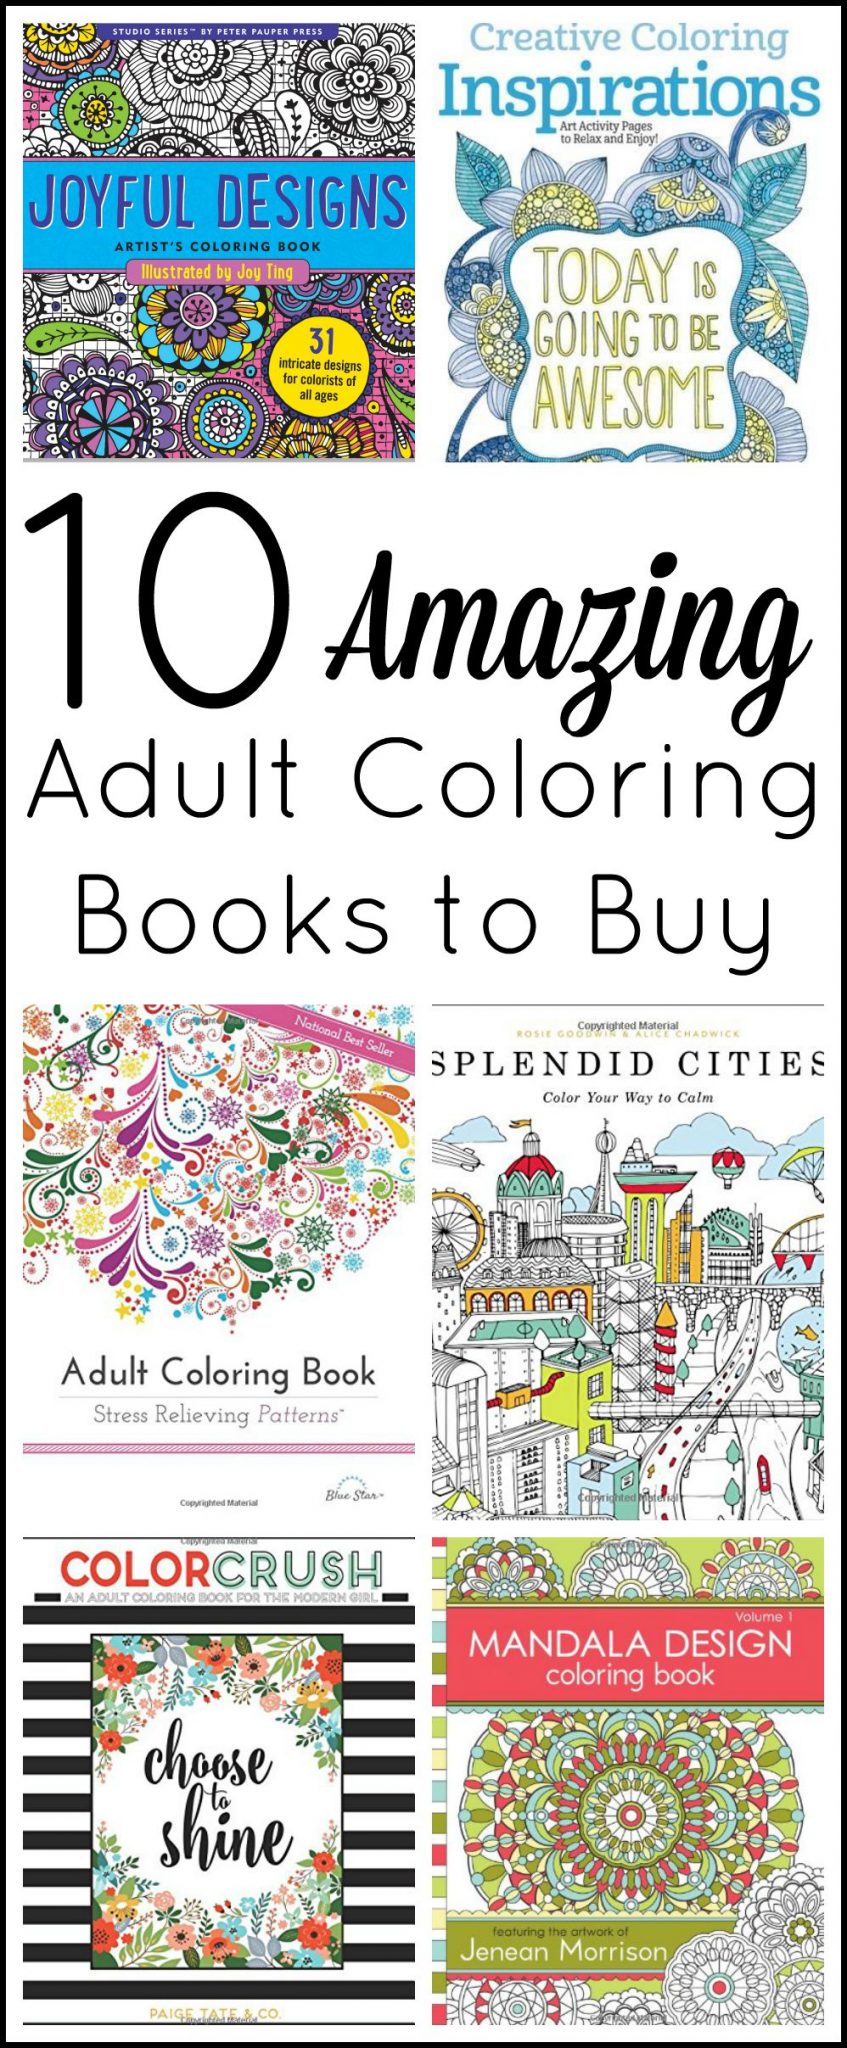 Mandala Designs Adult Coloring Book (31 stress-relieving designs) (Studio)